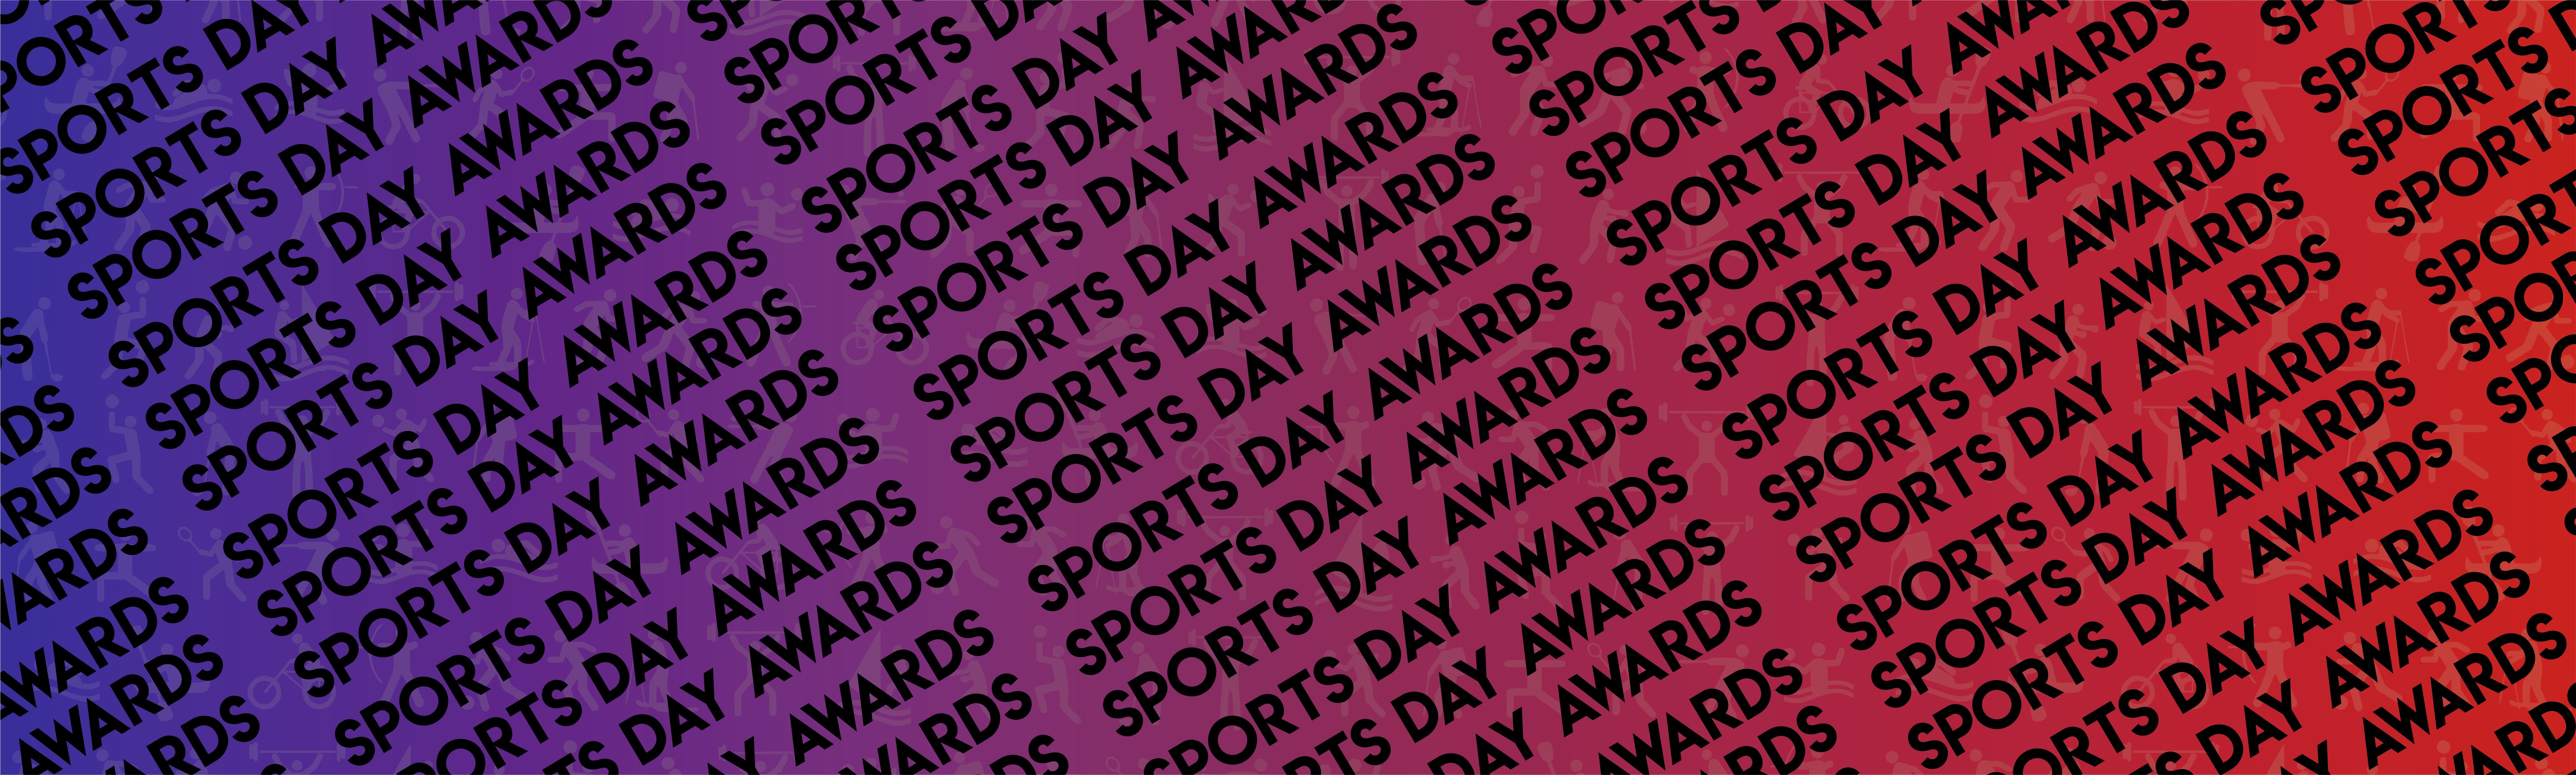 Sports Day Awards